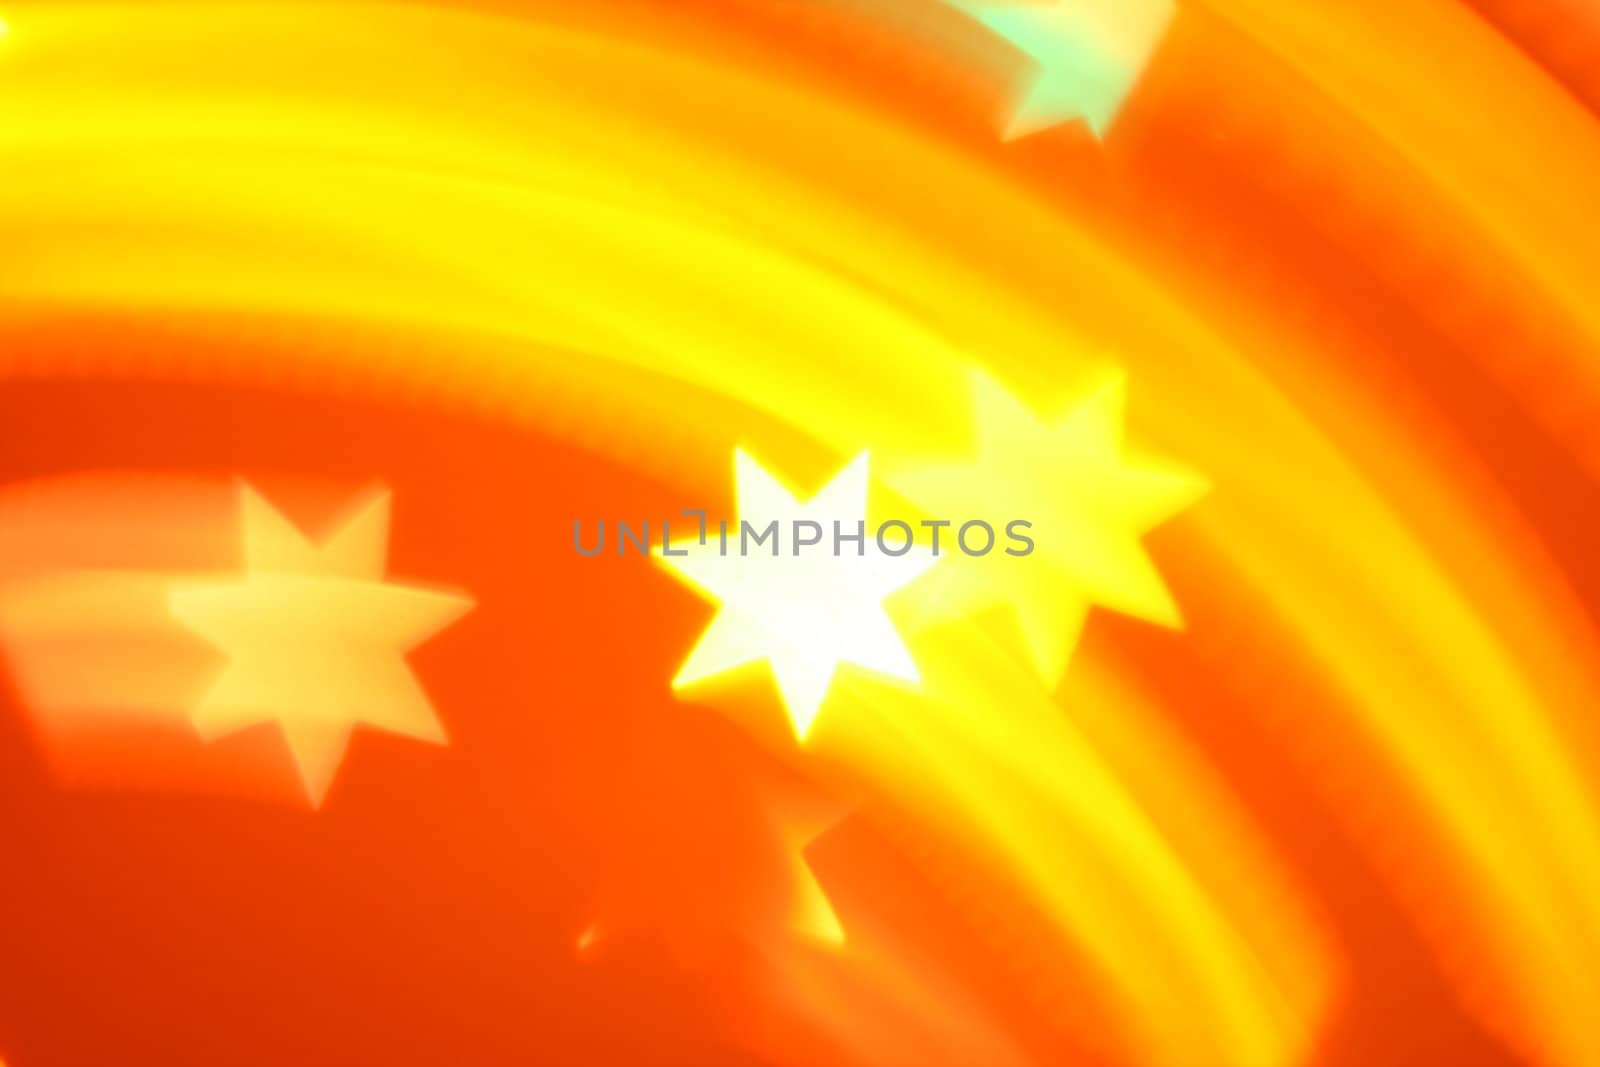 stars background by Yellowj